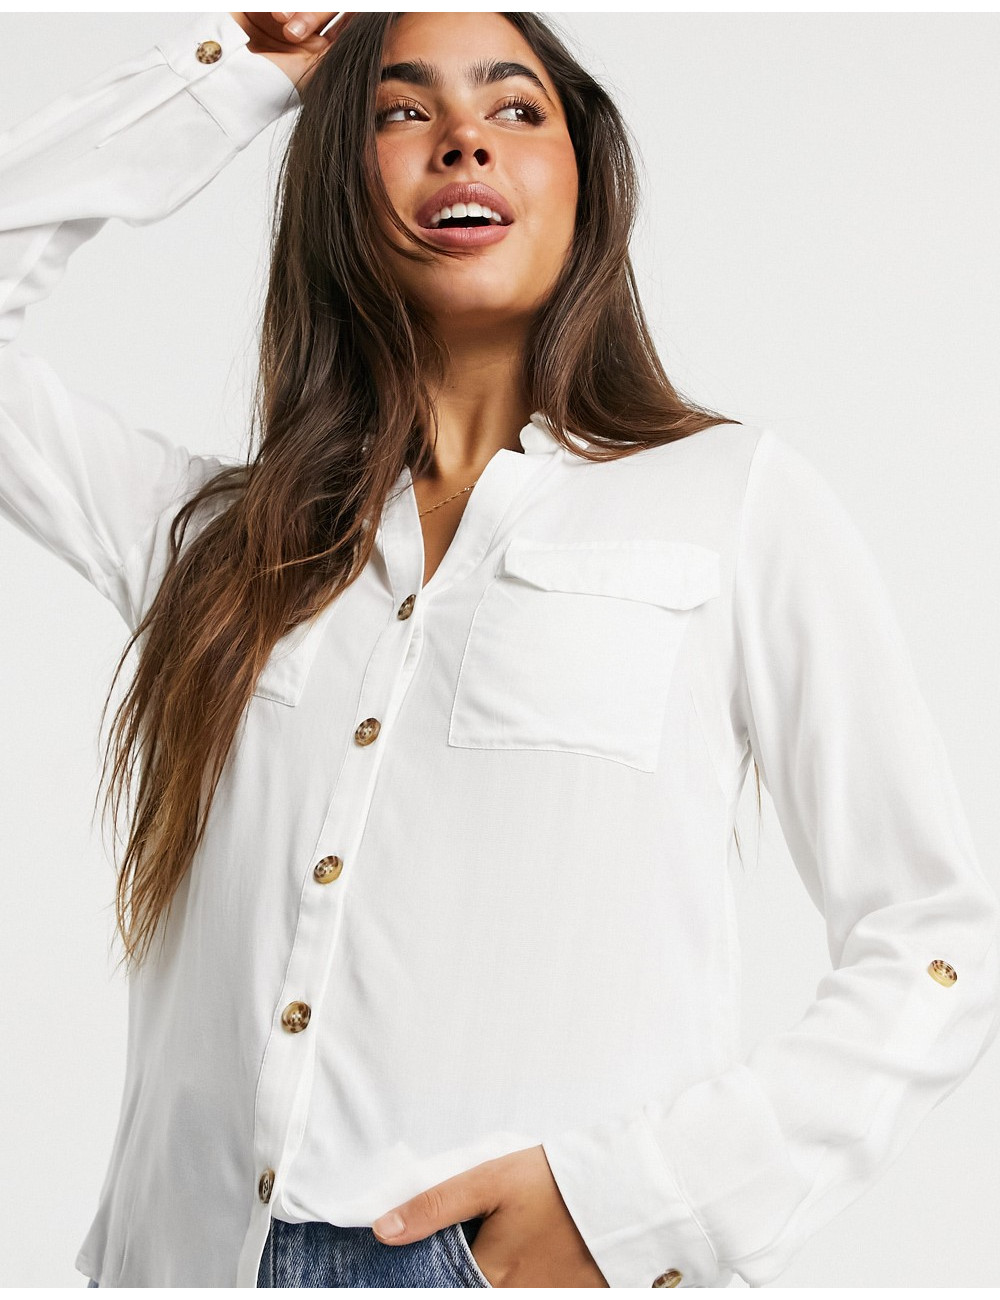 Vero Moda blouse in white